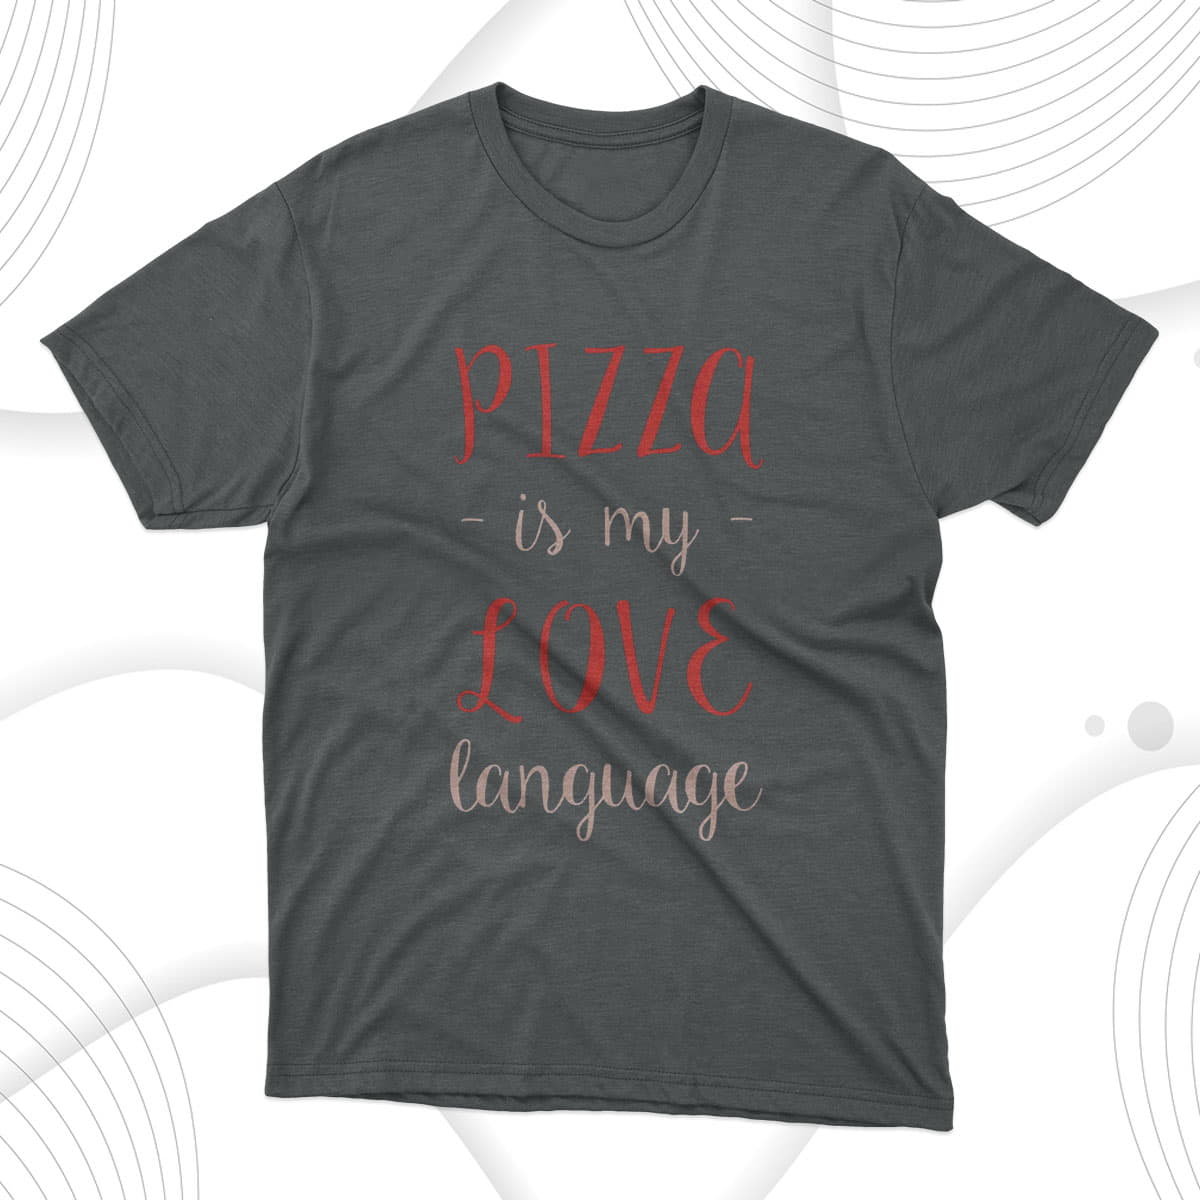 pizza is my love language italian iconic food italy t-shirt